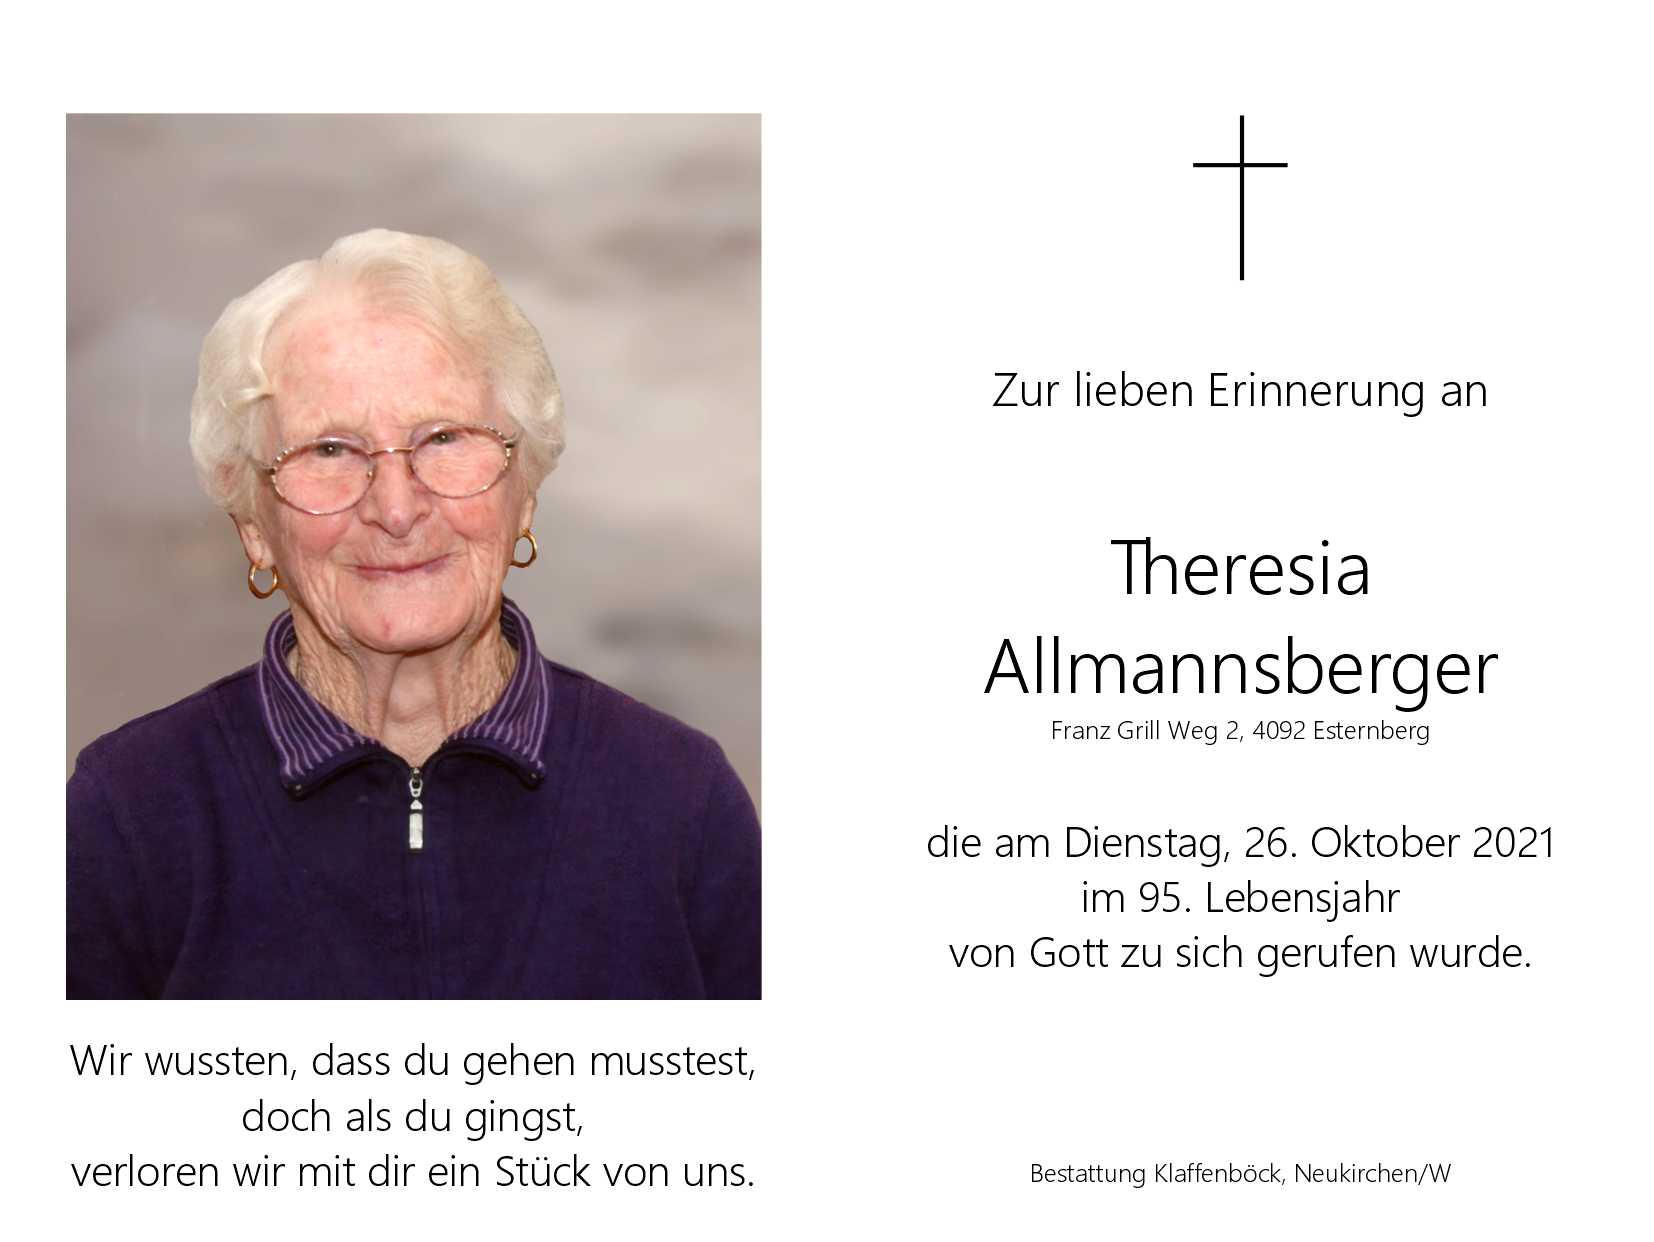 Theresia  Allmannsberger